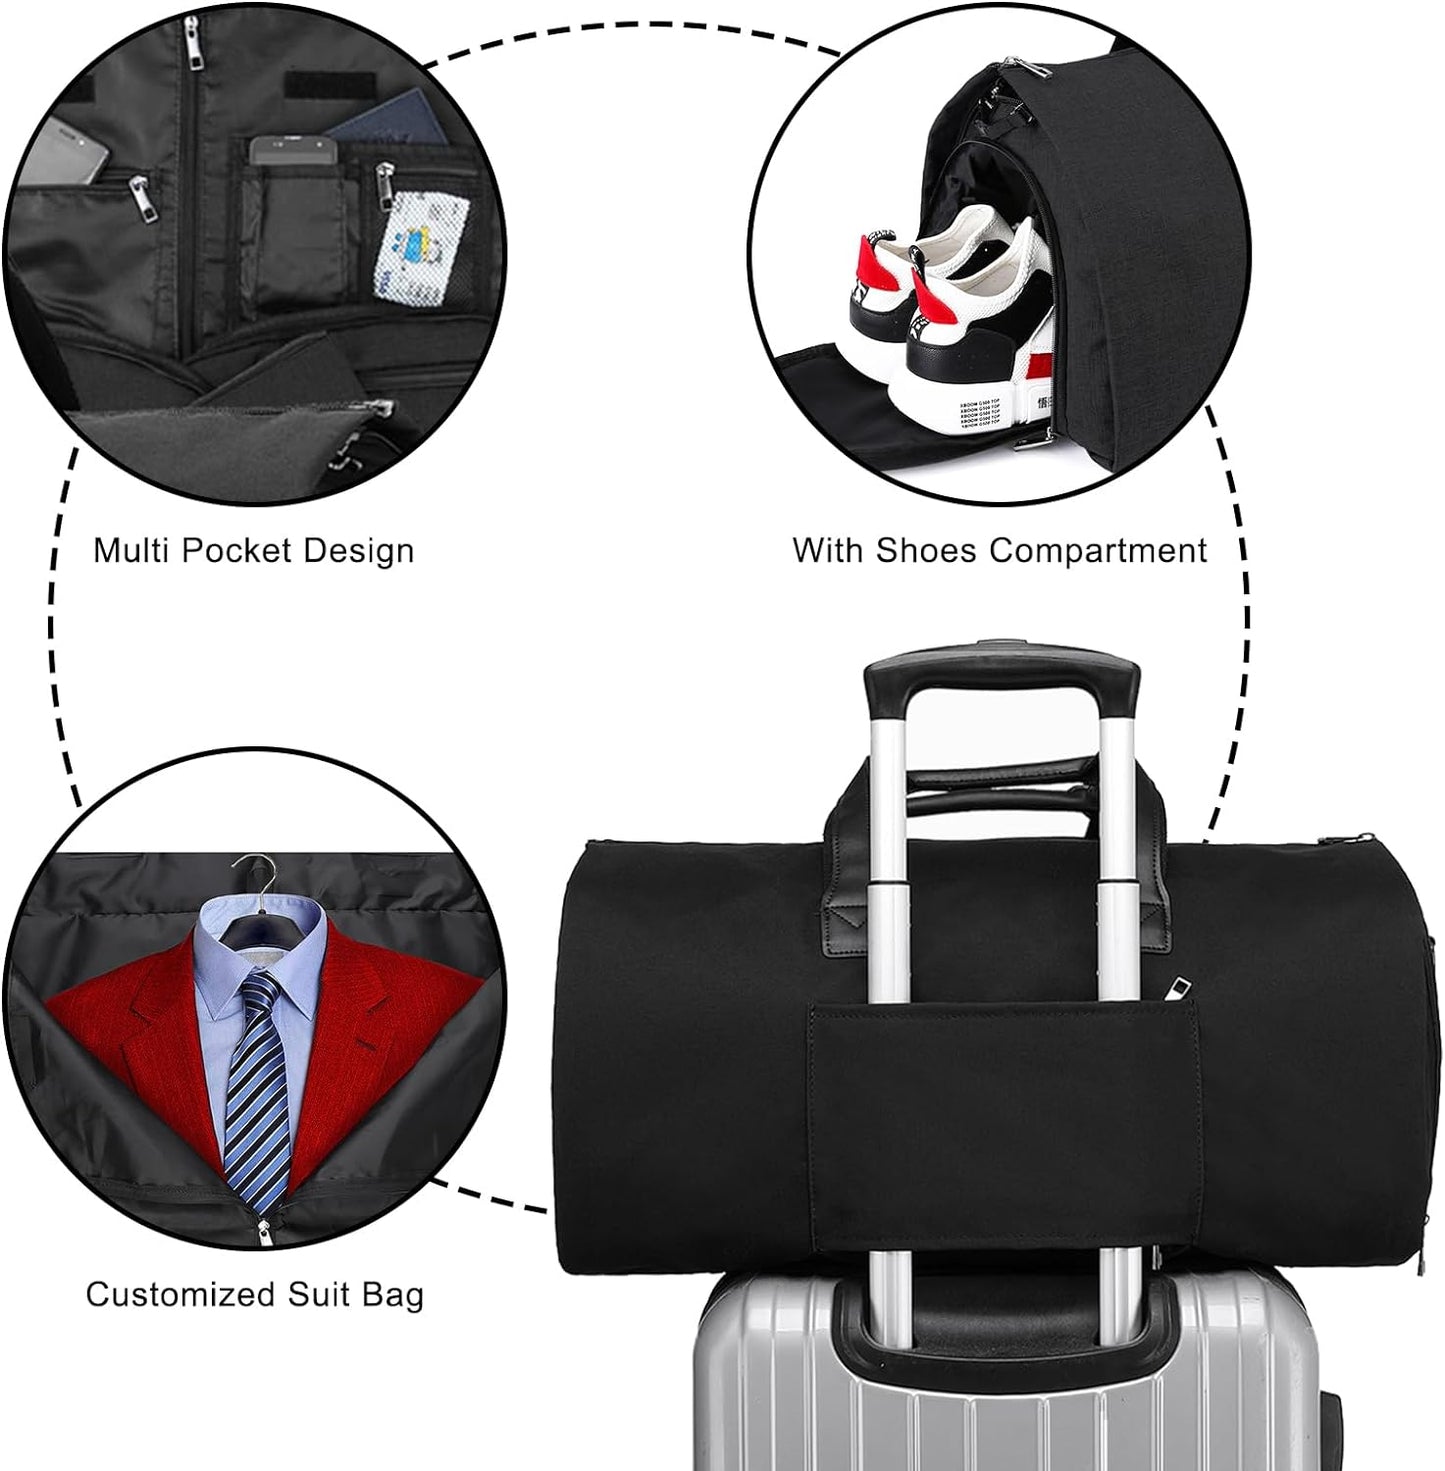 2 in 1 Convertible Garment Bag with Shoulder Strap,Suit Travel Bag Carry on Garment Duffel Bag for Men Women Black